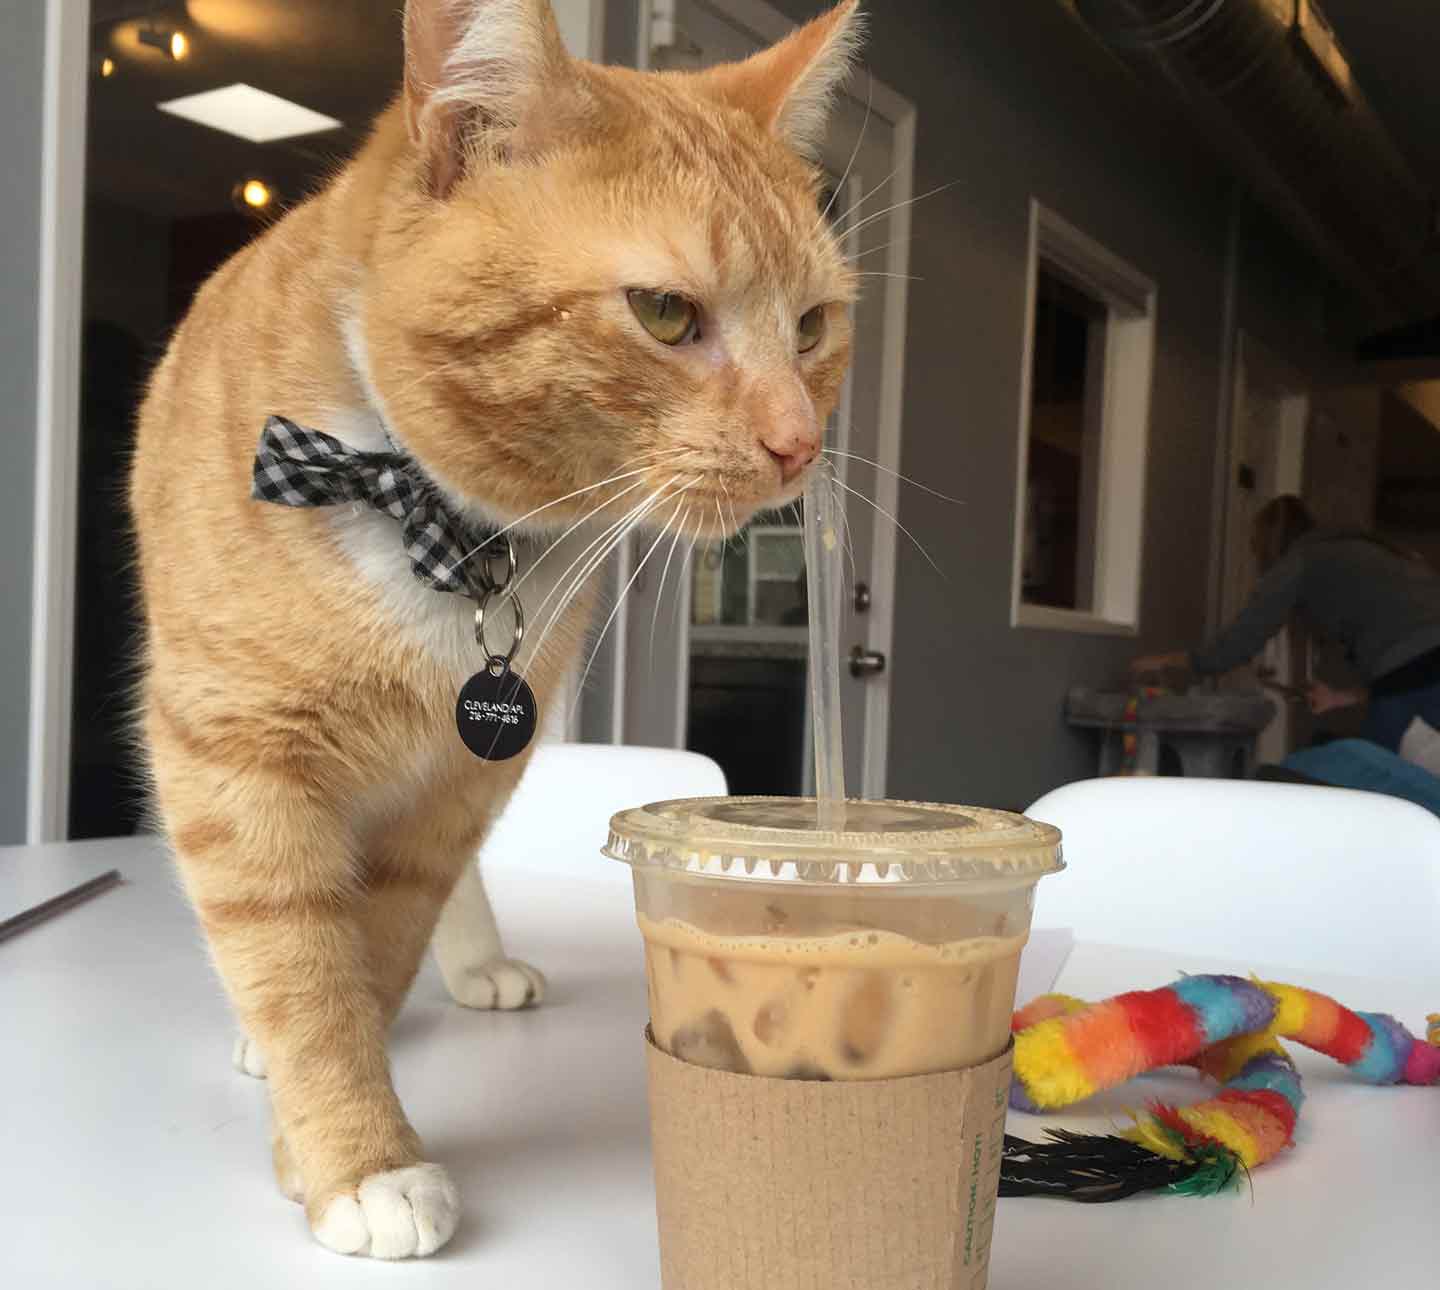 The Cats - affoGATO Cat Café